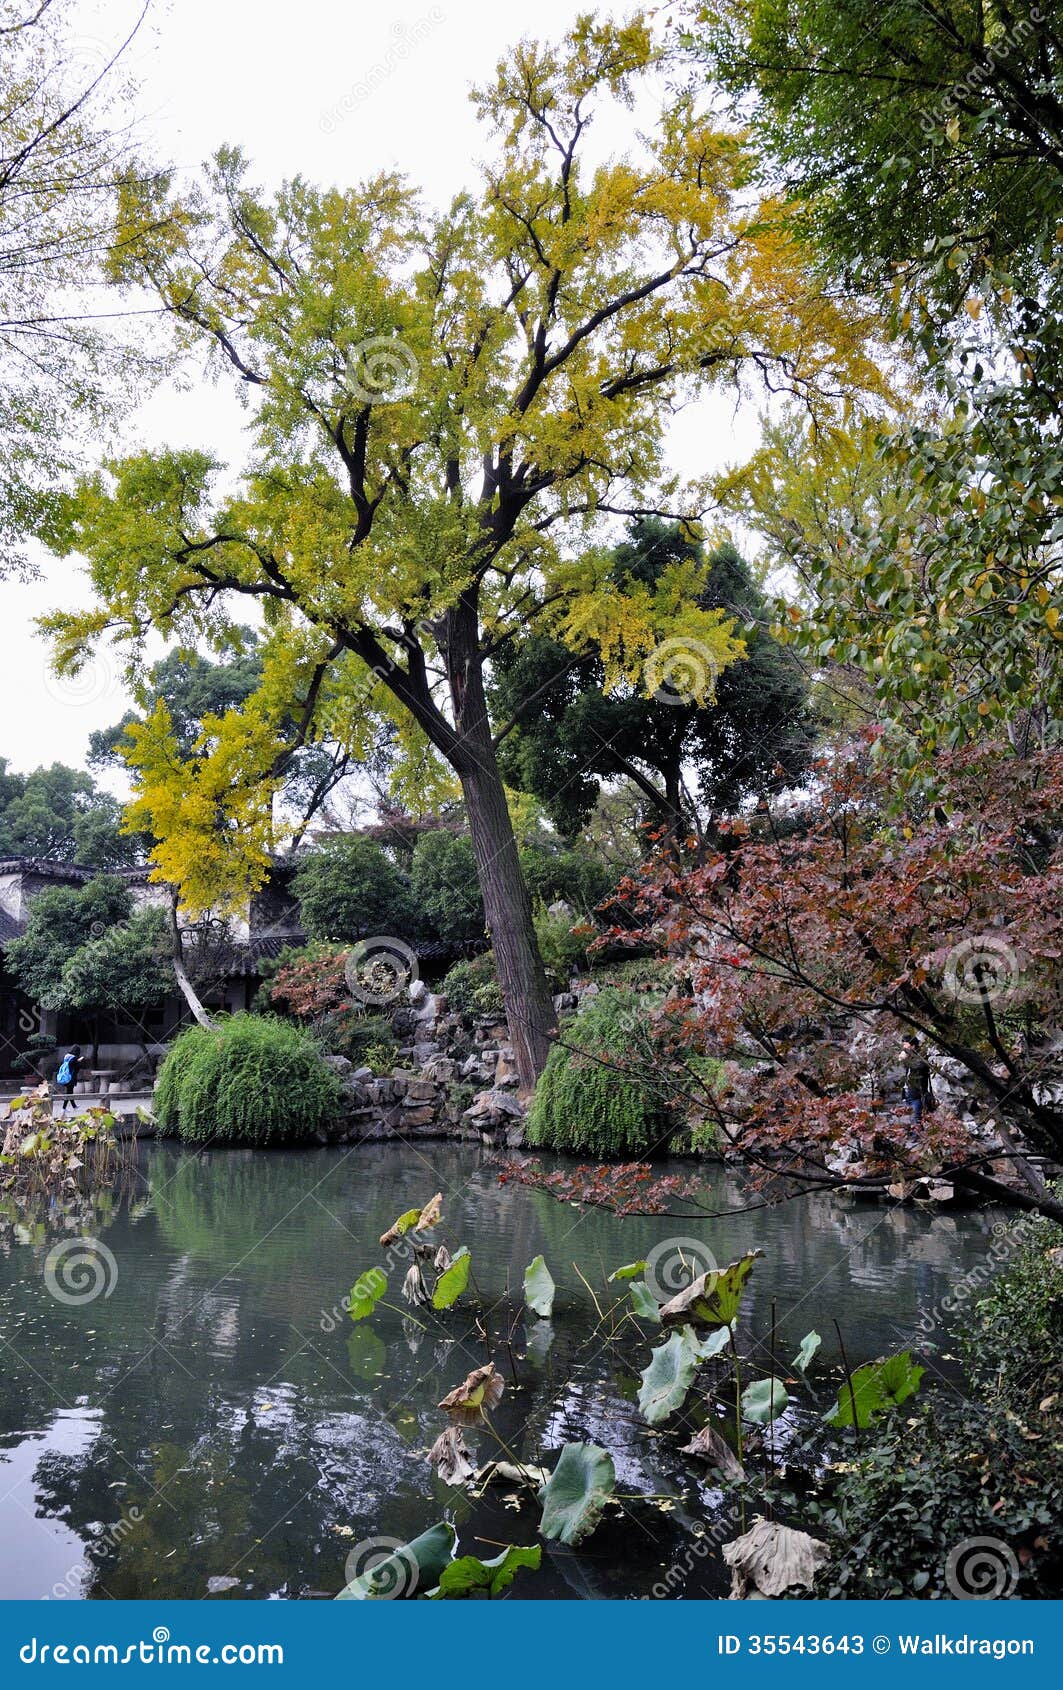 Lingering garden in suzhou stock image. Image of lingering - 35543643